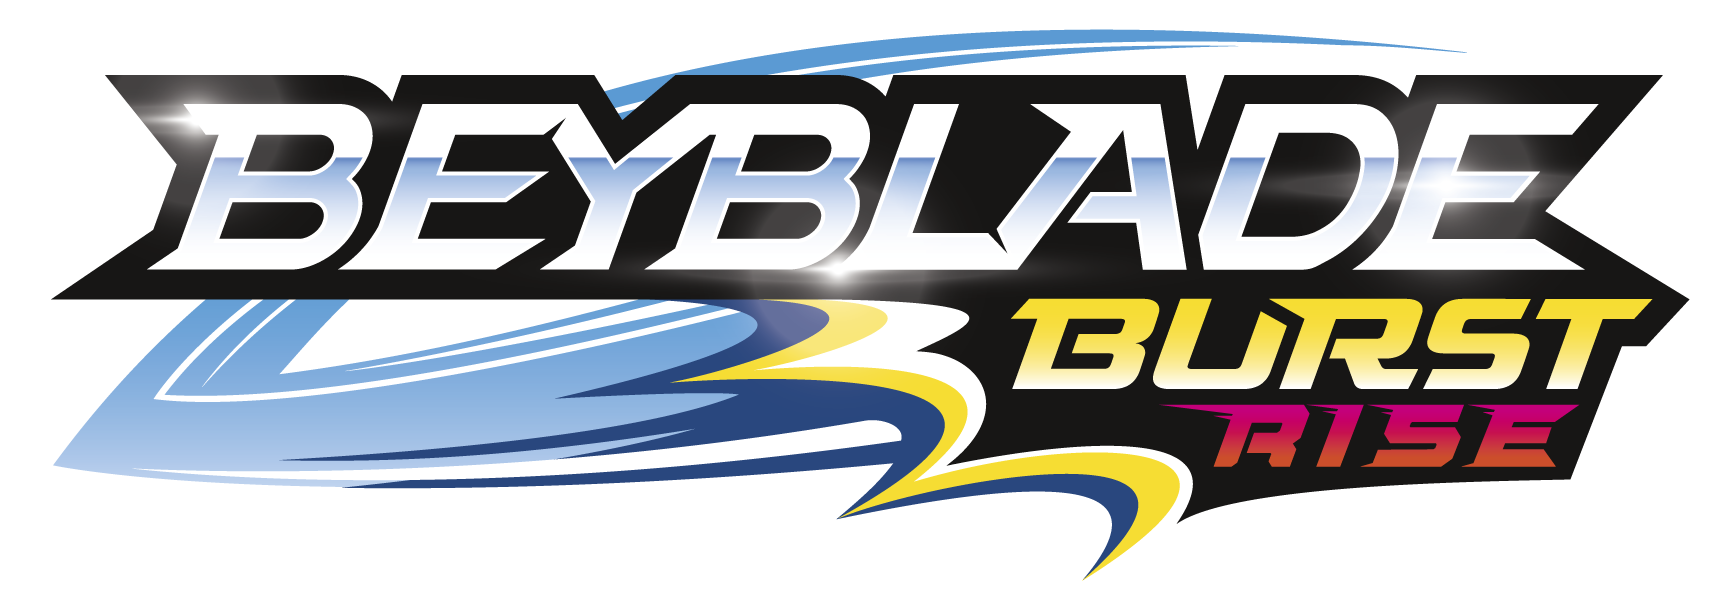 Beyblade Logo